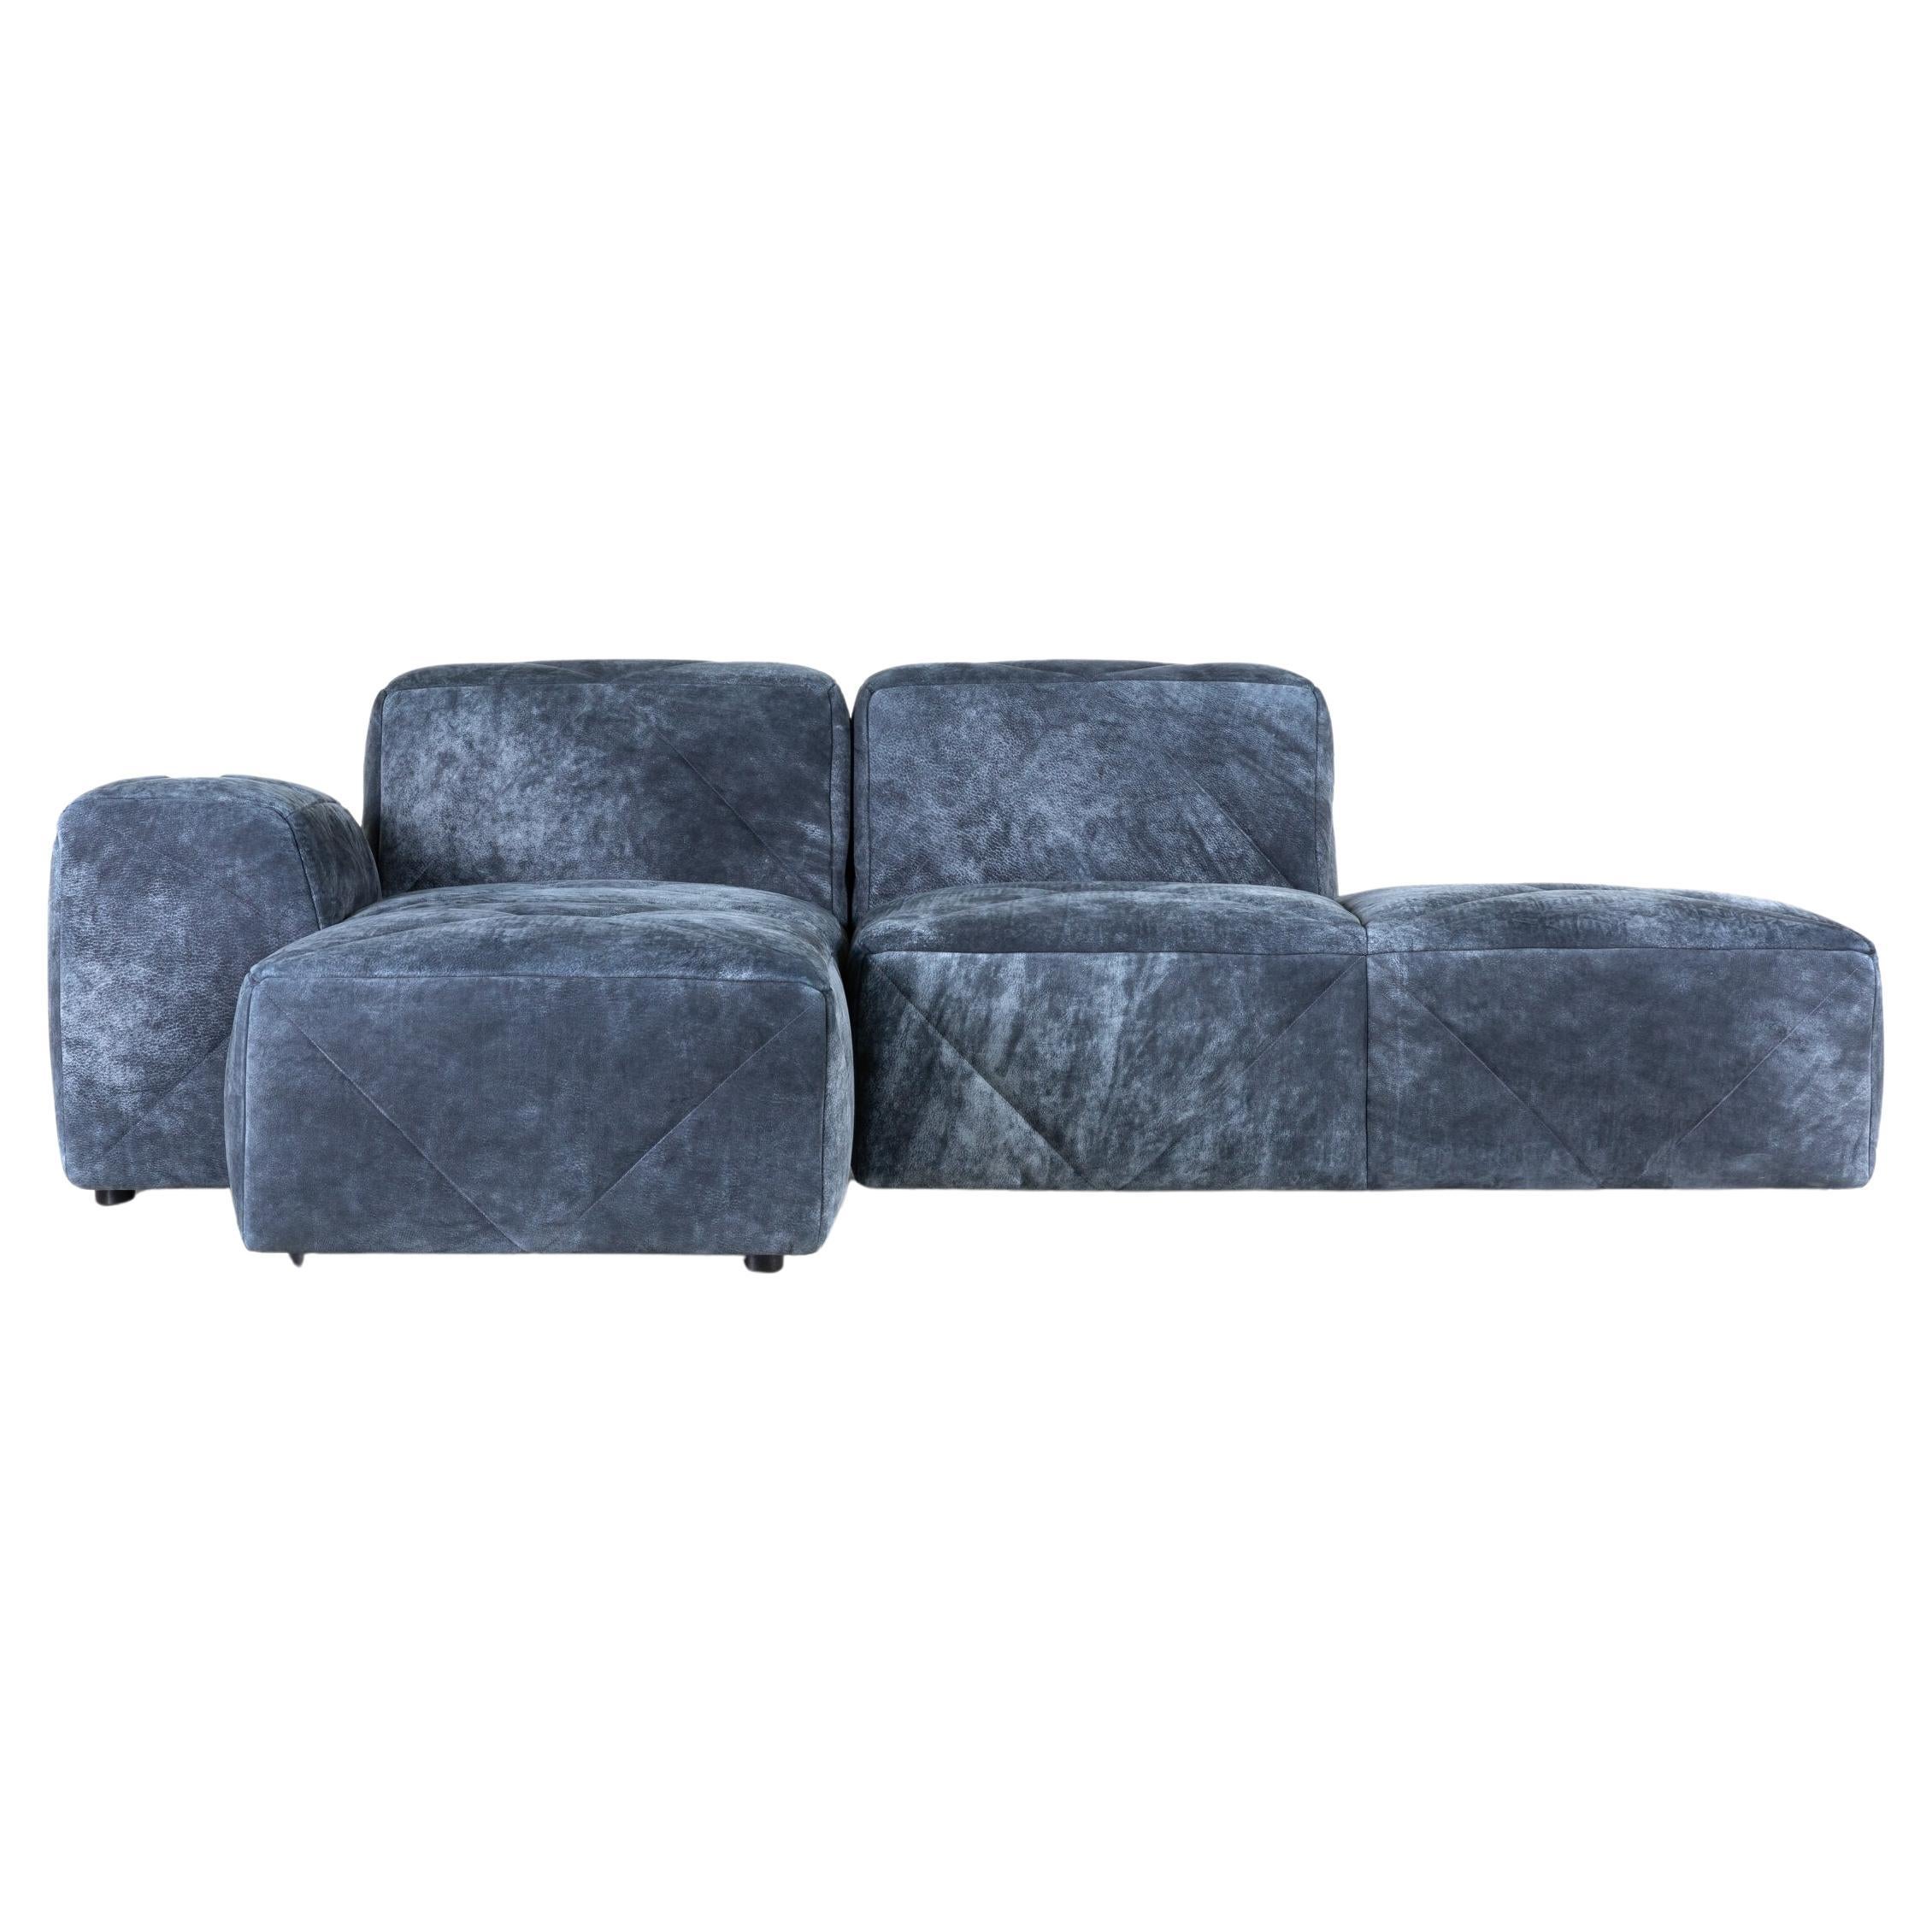 Moooi BFF Left Arm Chaise Longue Sofa in Dwarf Rhino Buffed Blue Upholstery